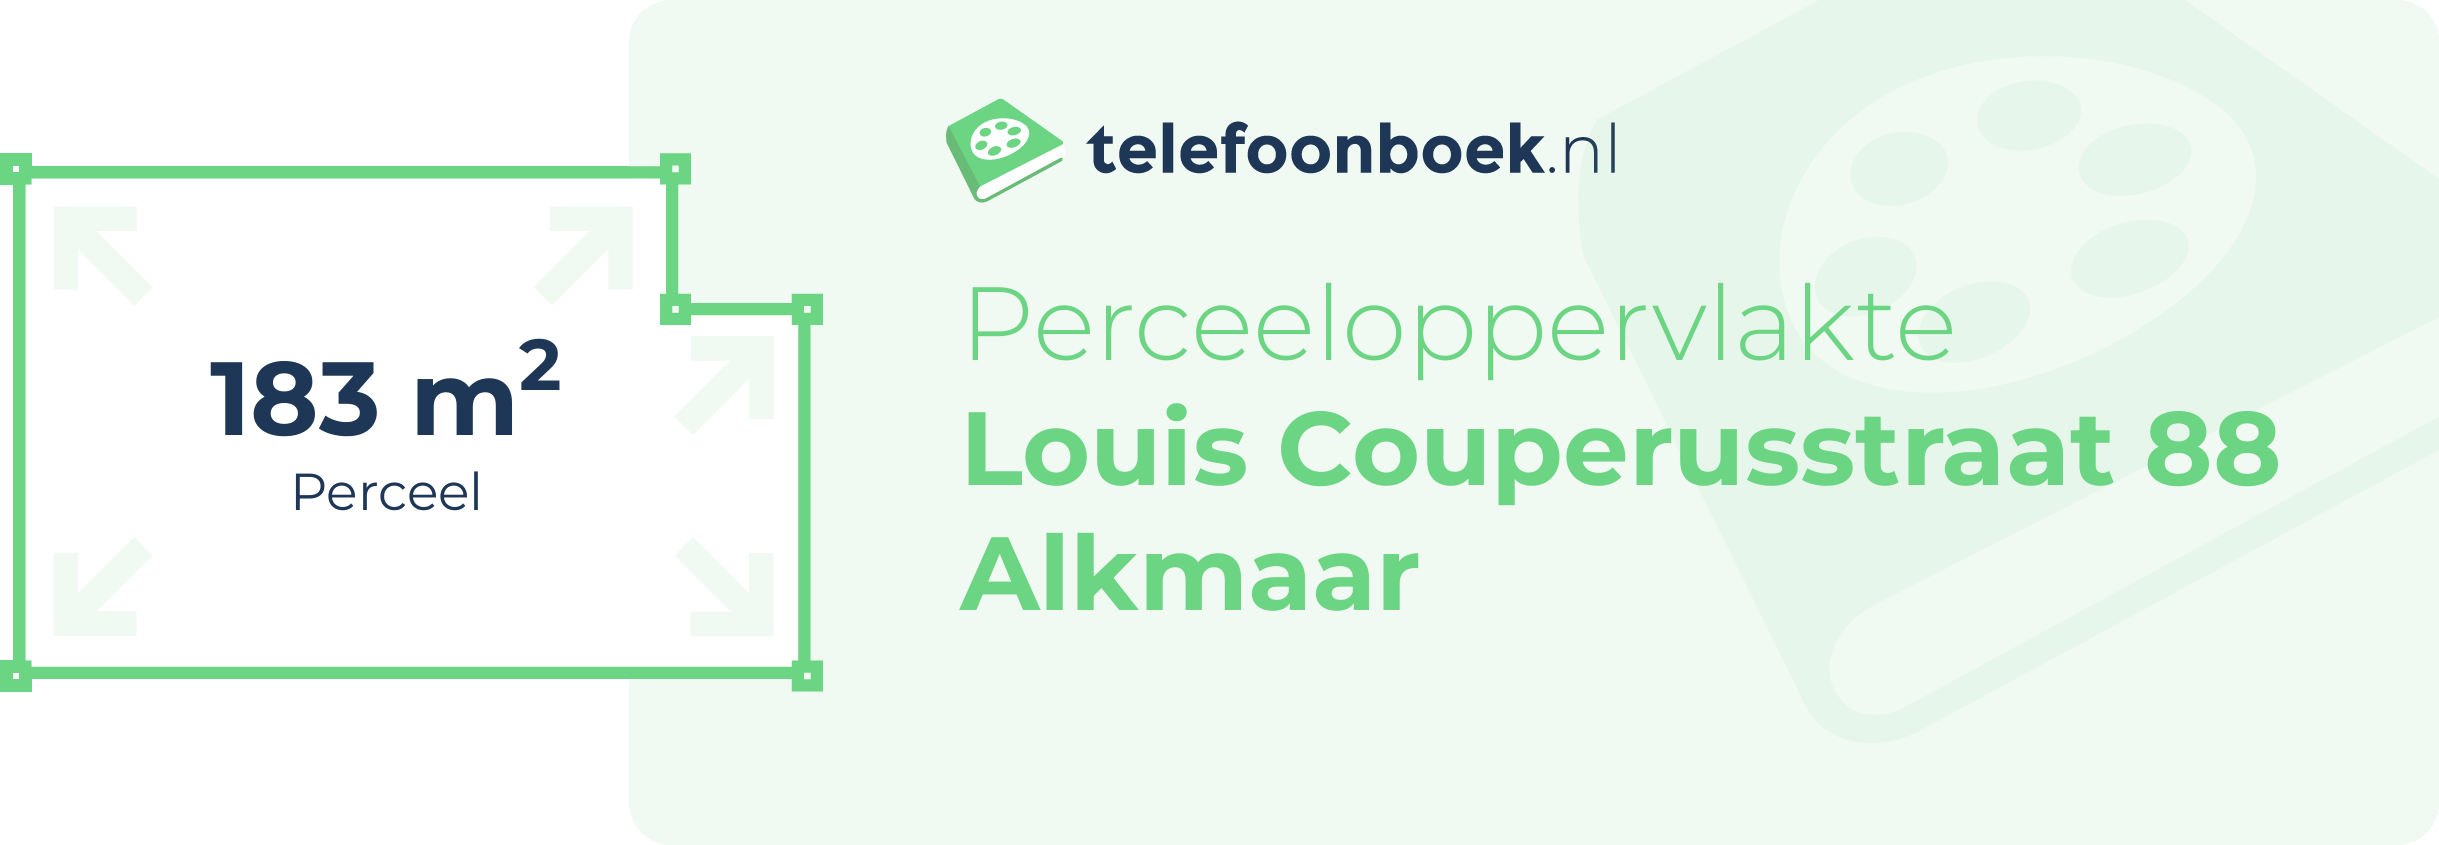 Perceeloppervlakte Louis Couperusstraat 88 Alkmaar